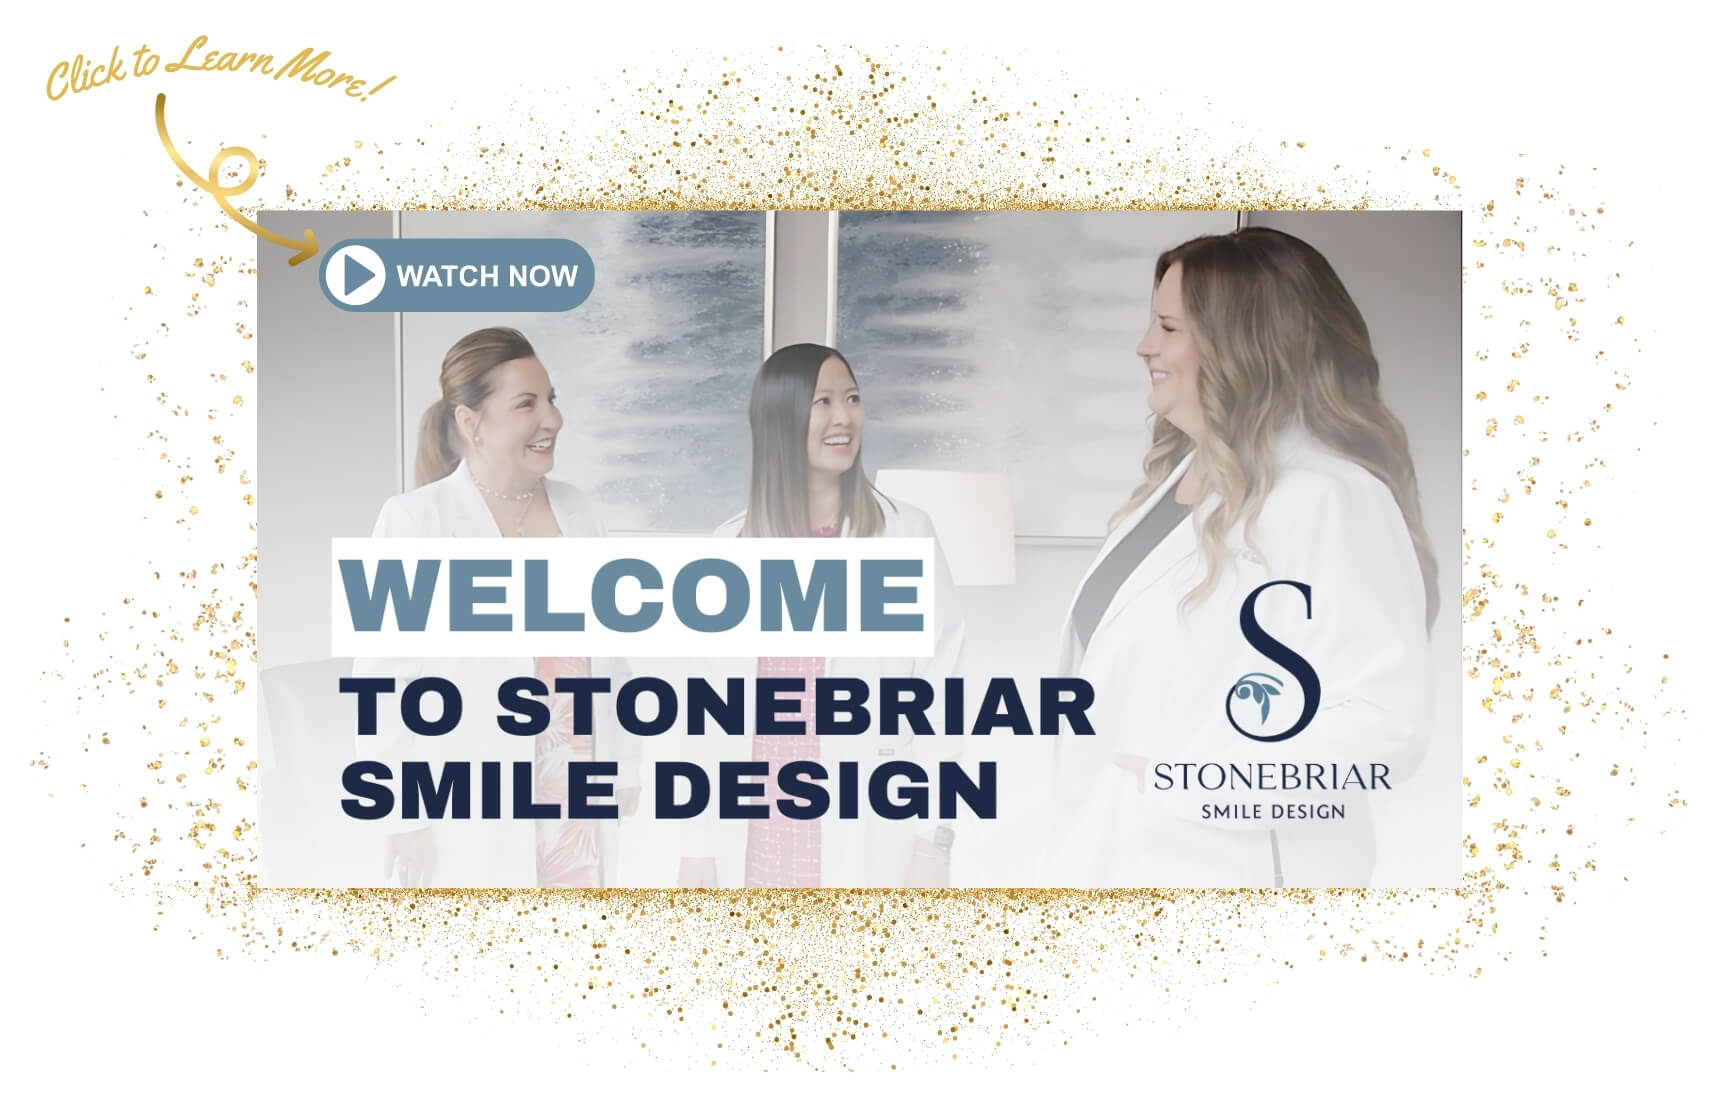 Video Welcome to Stonebriar Smile Design